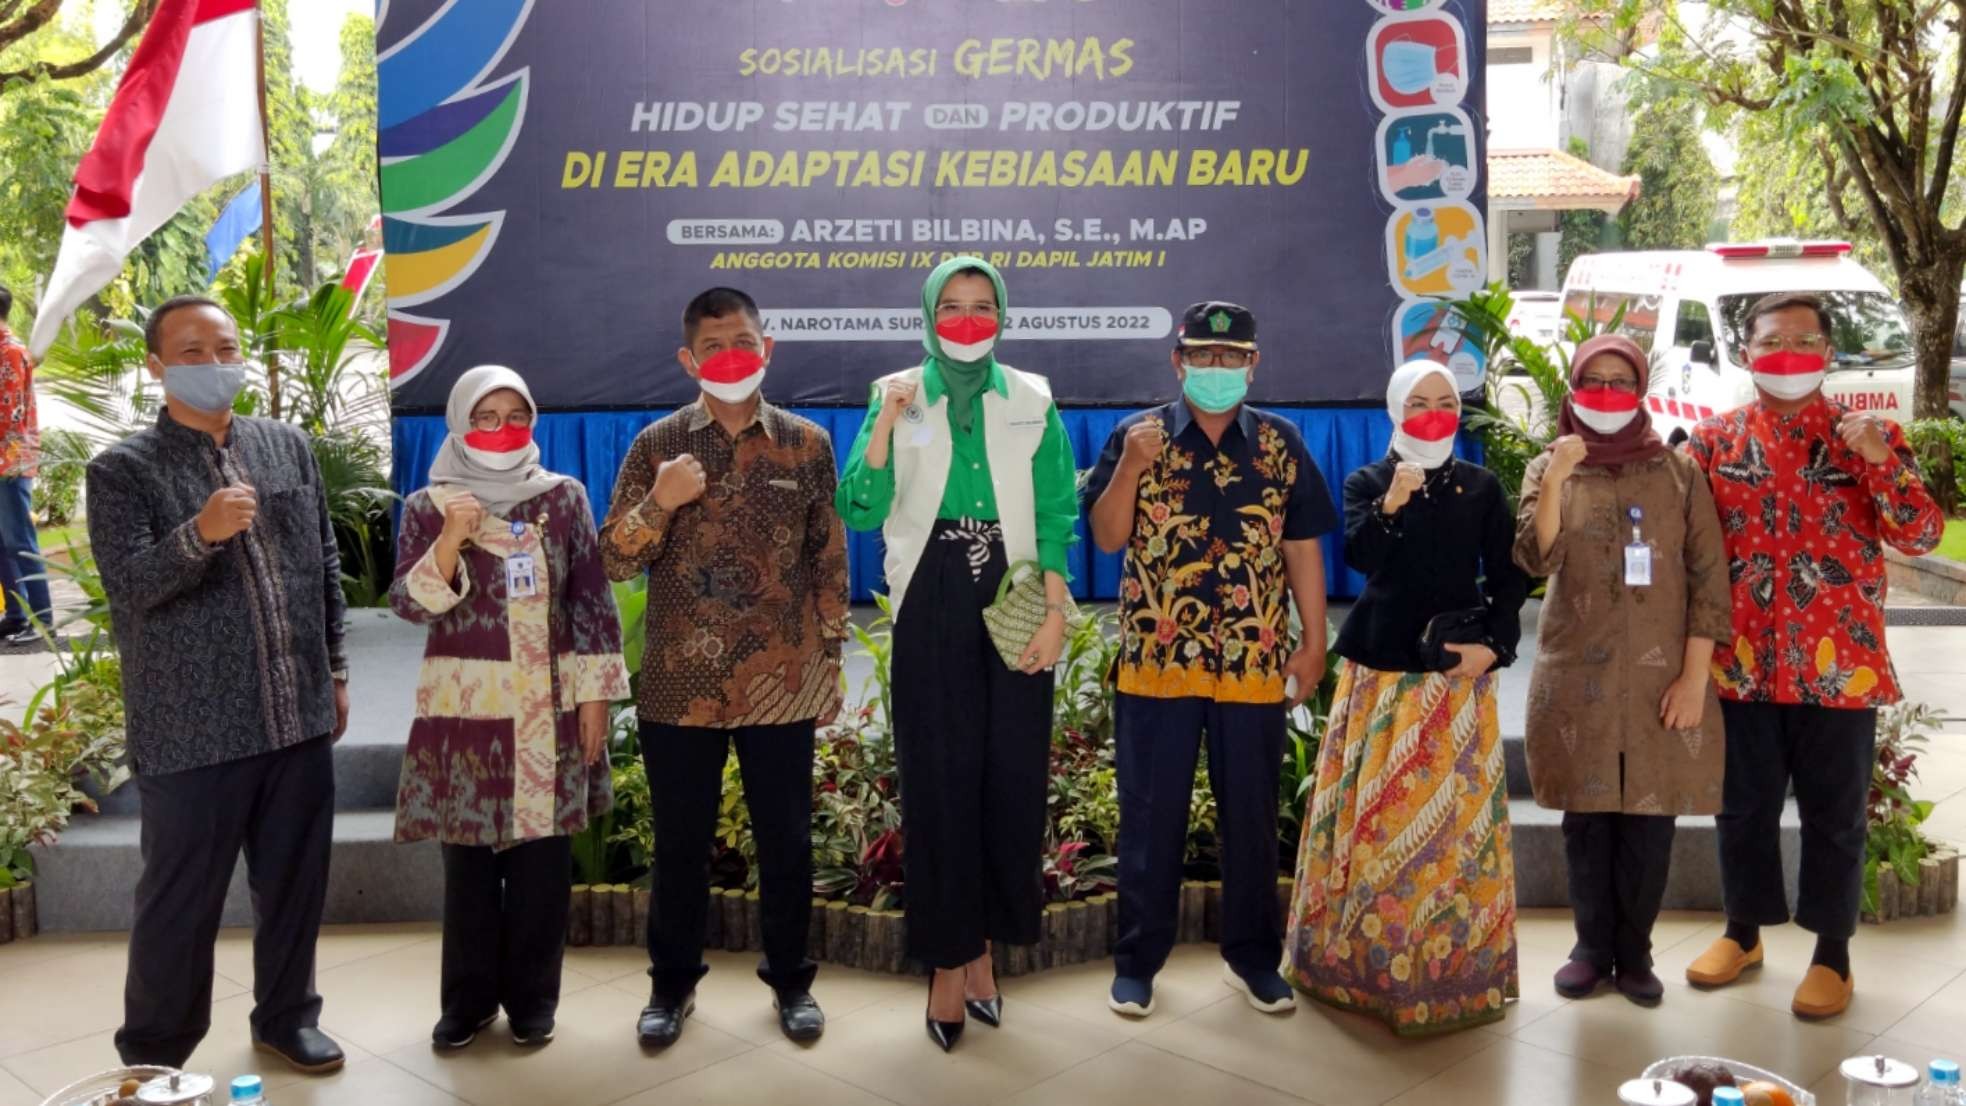 Anggota Komisi IX DPR RI, Arzeti Bilbina (tengah) bersama stakeholder terkait usai membuka sosialisasi germas di Universitas Narotama, Surabaya, Jumat 12 Agustus 2022. (Foto: Fariz Yarbo/Ngopibareng.id)